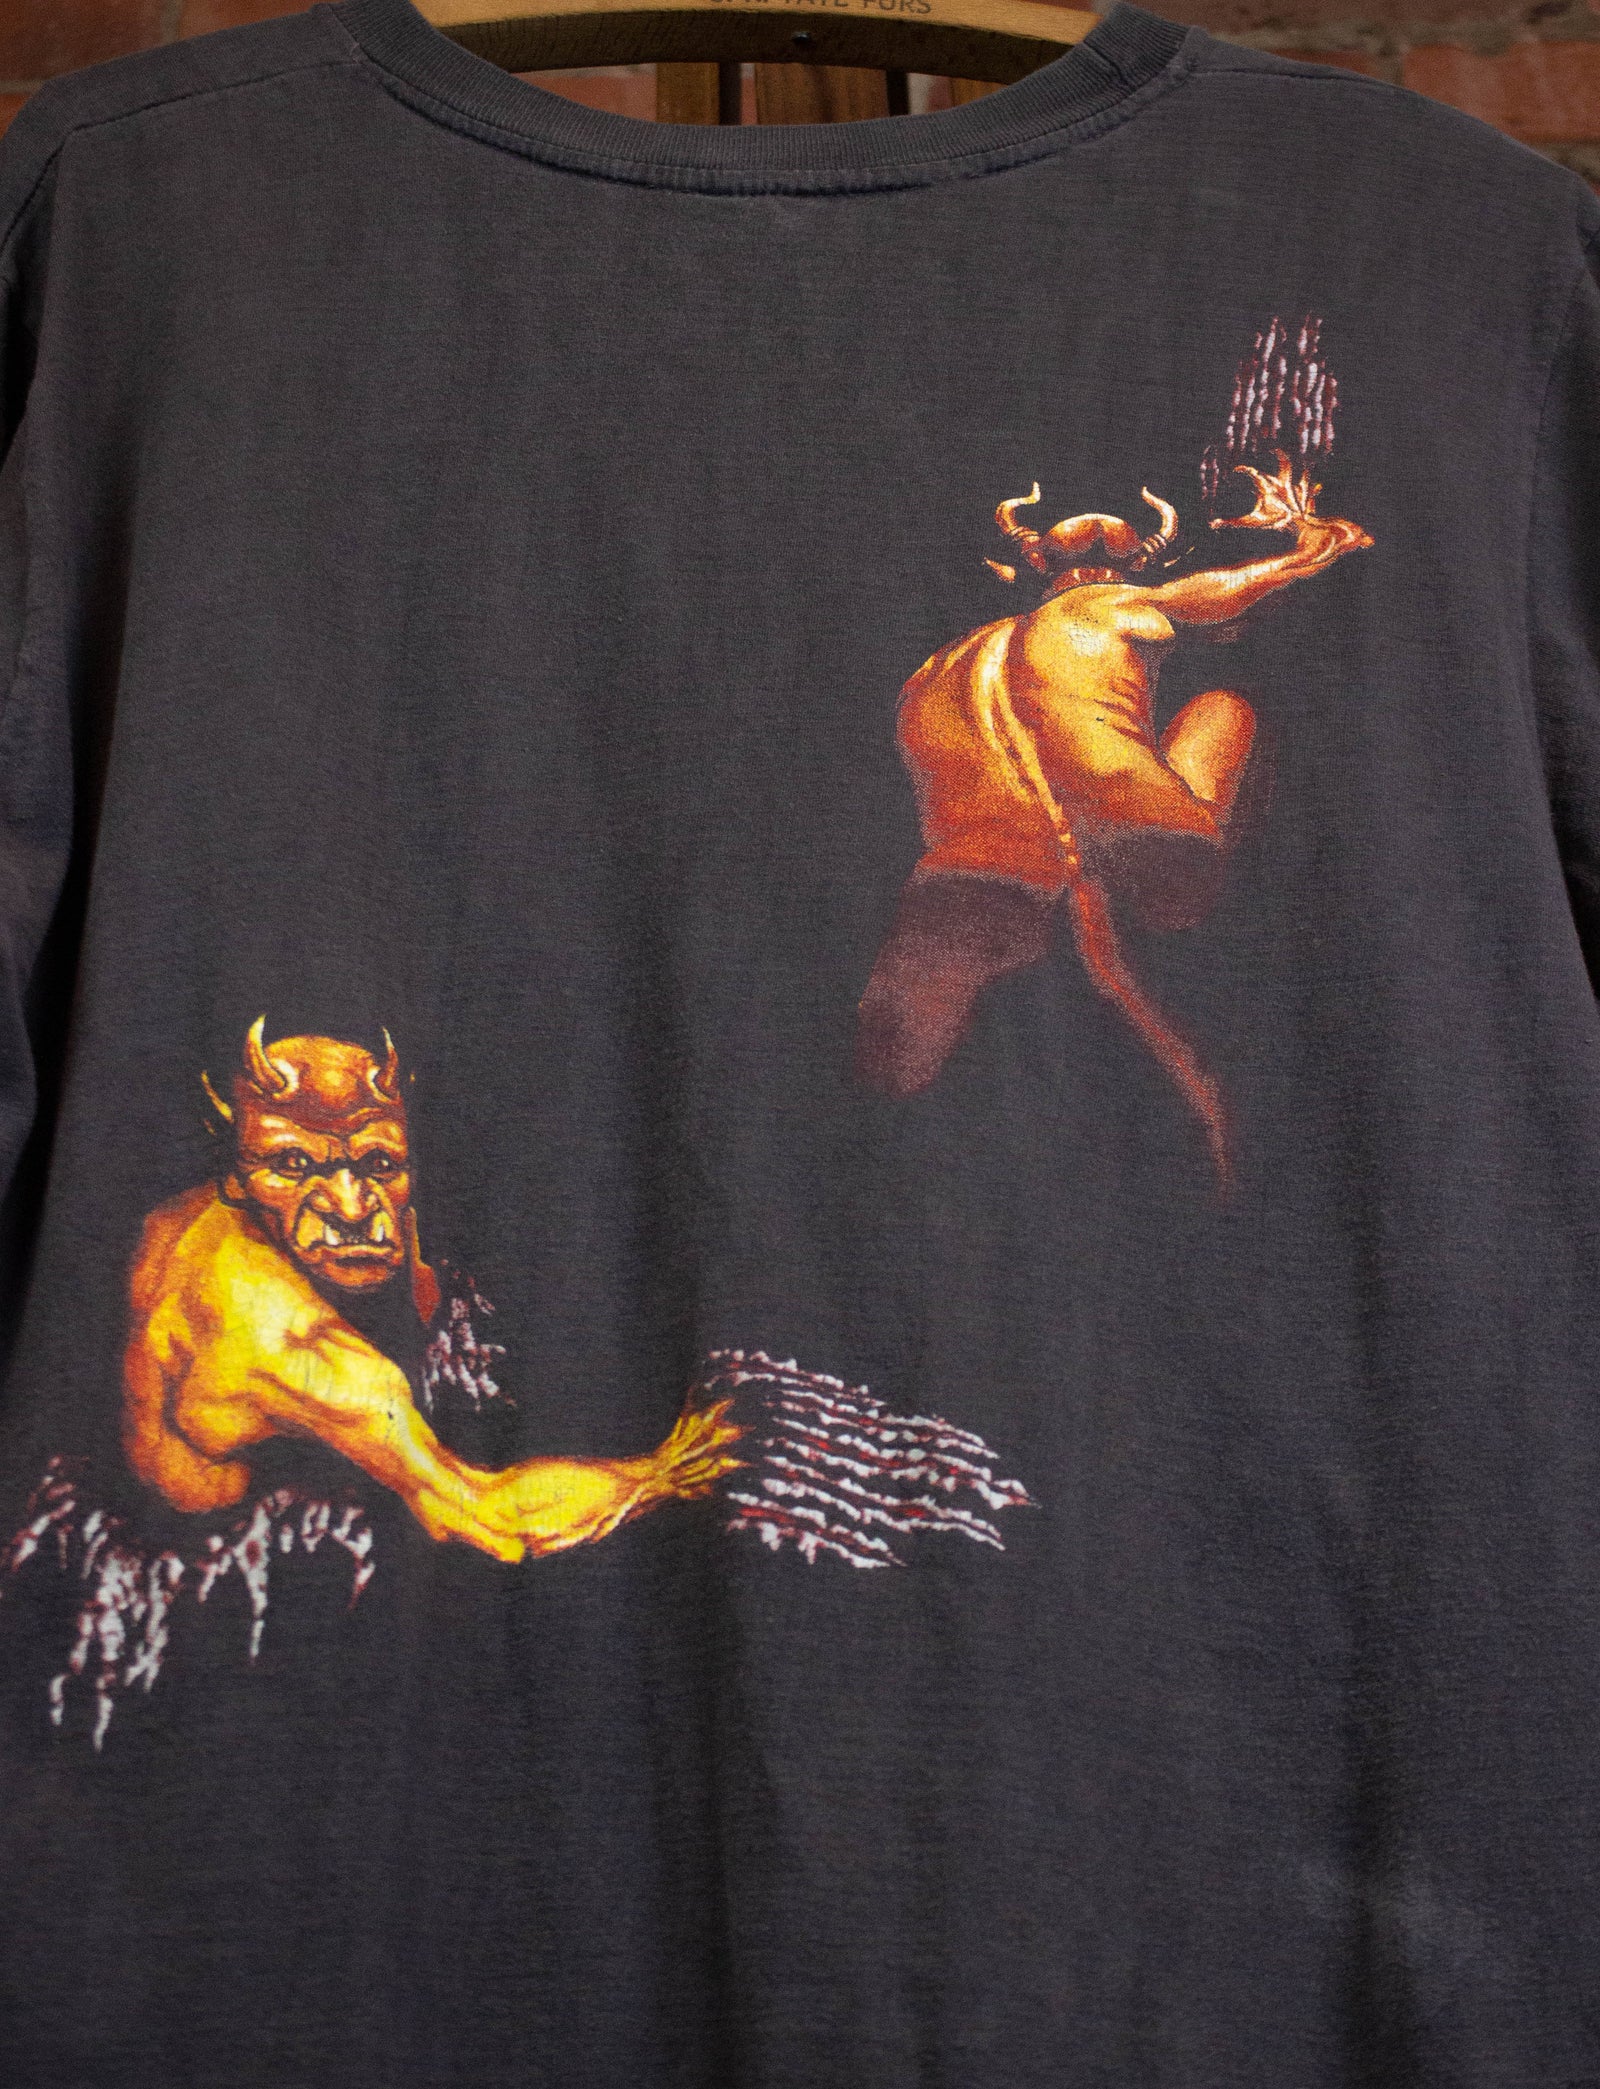 Vintage Megadeth 1992 Vic Rattlehead vs Demons Concert T Shirt